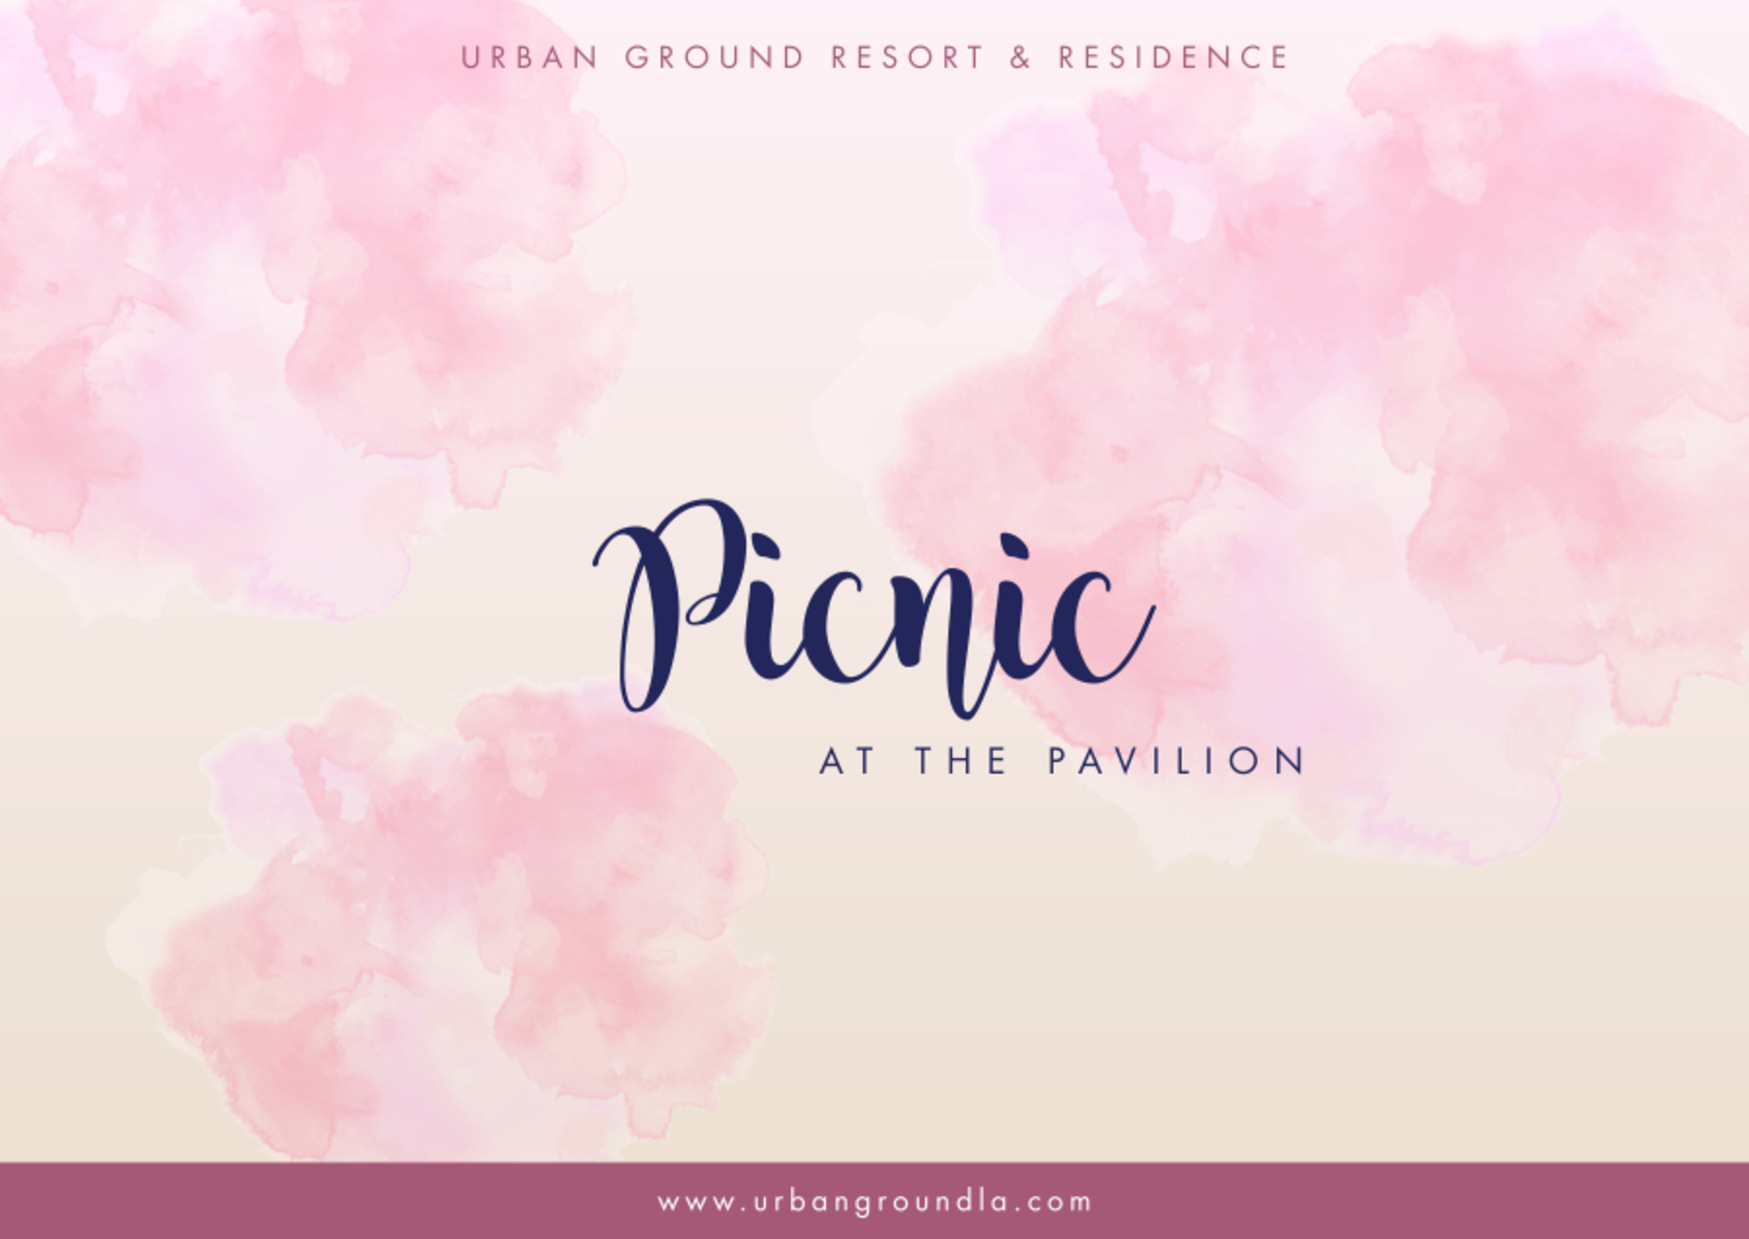 Picnic Urban Ground Resort & Residence